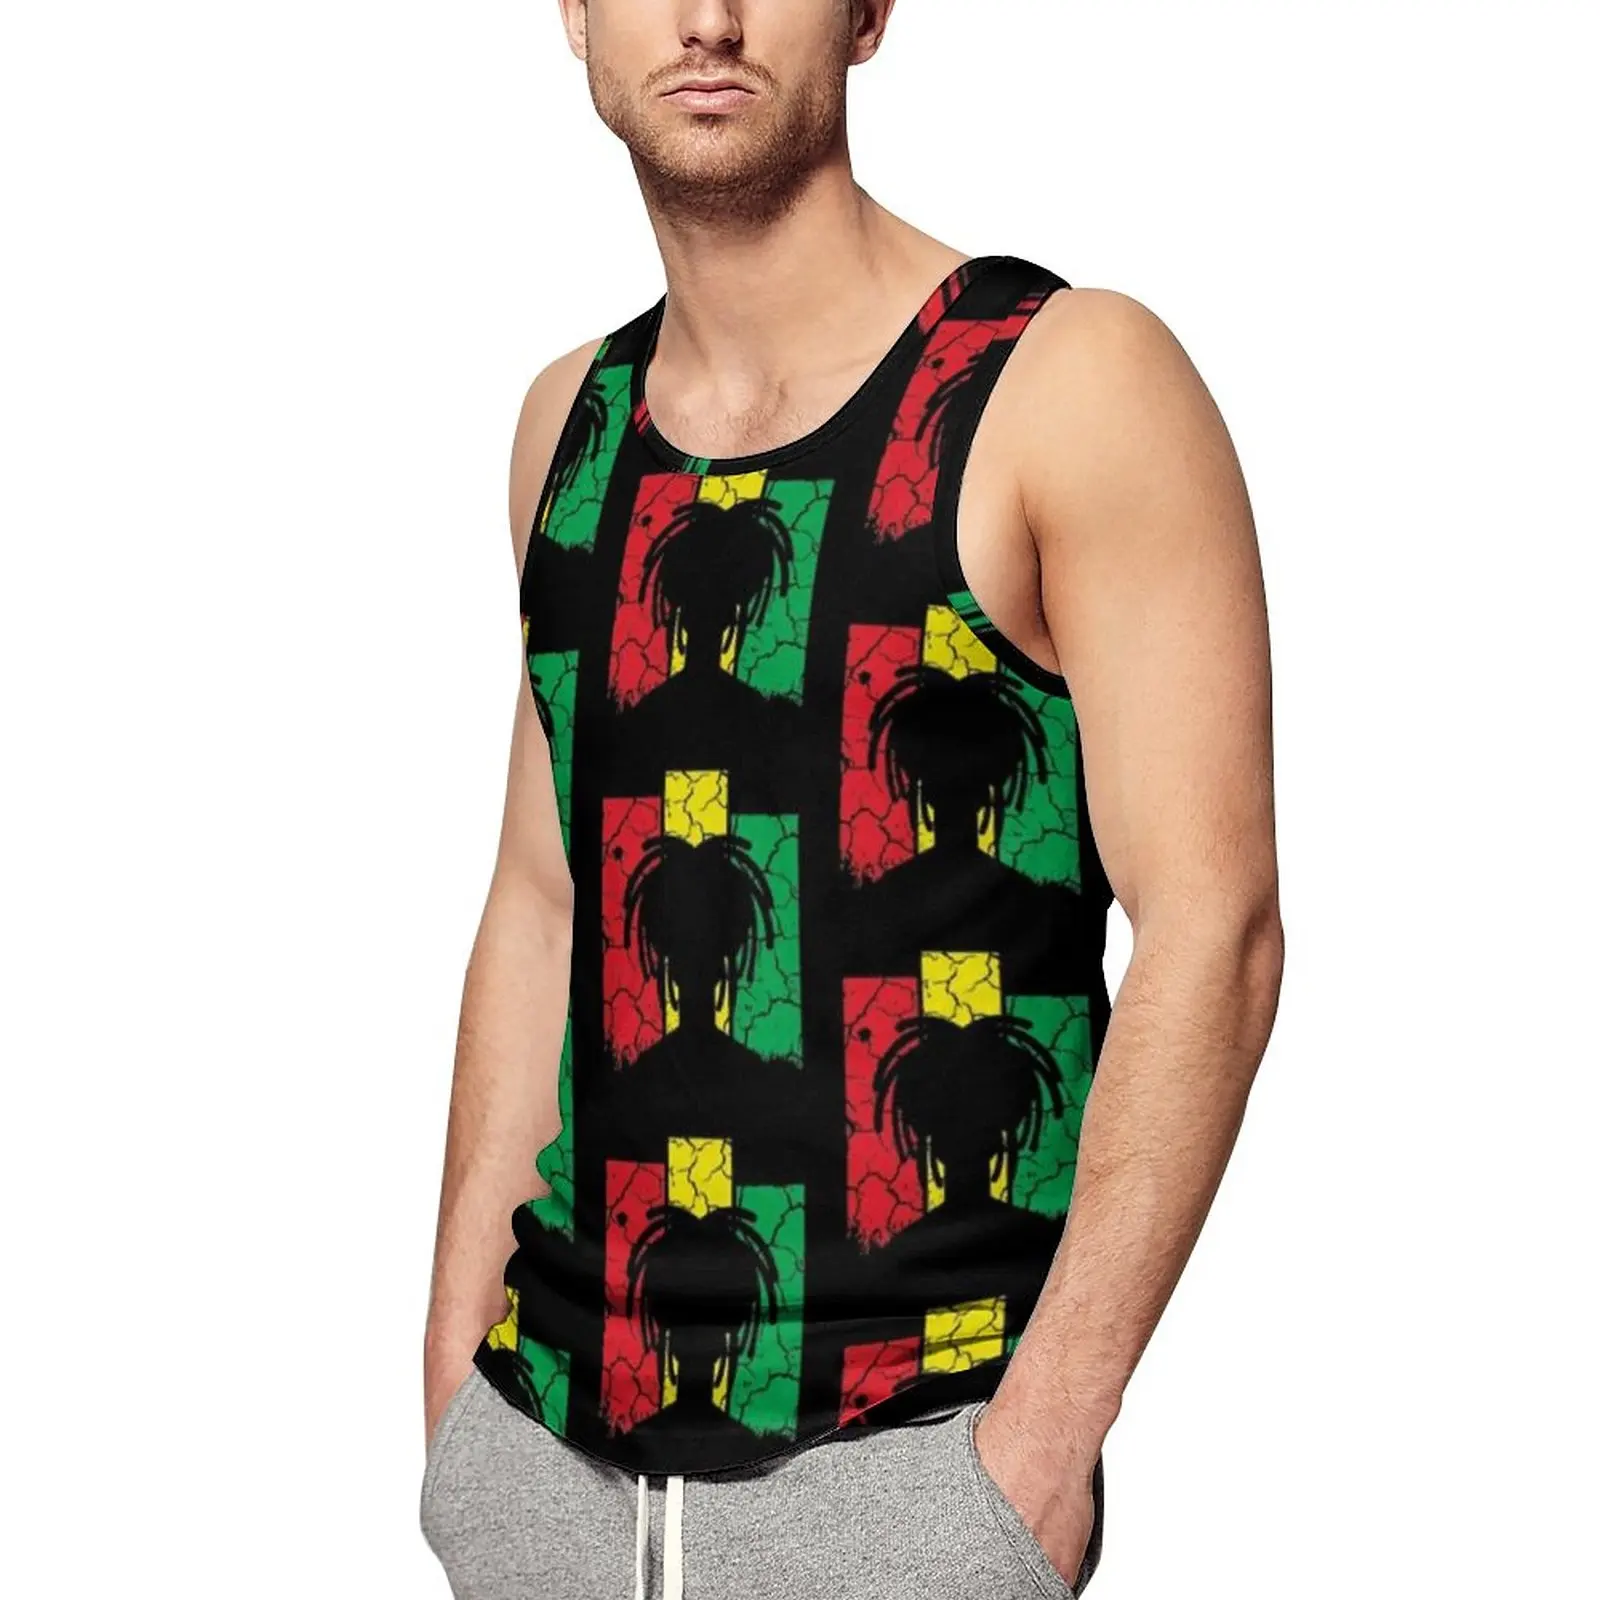 

Bob Marley Summer Tank Top Jamaican Singer Musician Gym Tops Male Custom Sportswear Sleeveless Shirts Plus Size 4XL 5XL